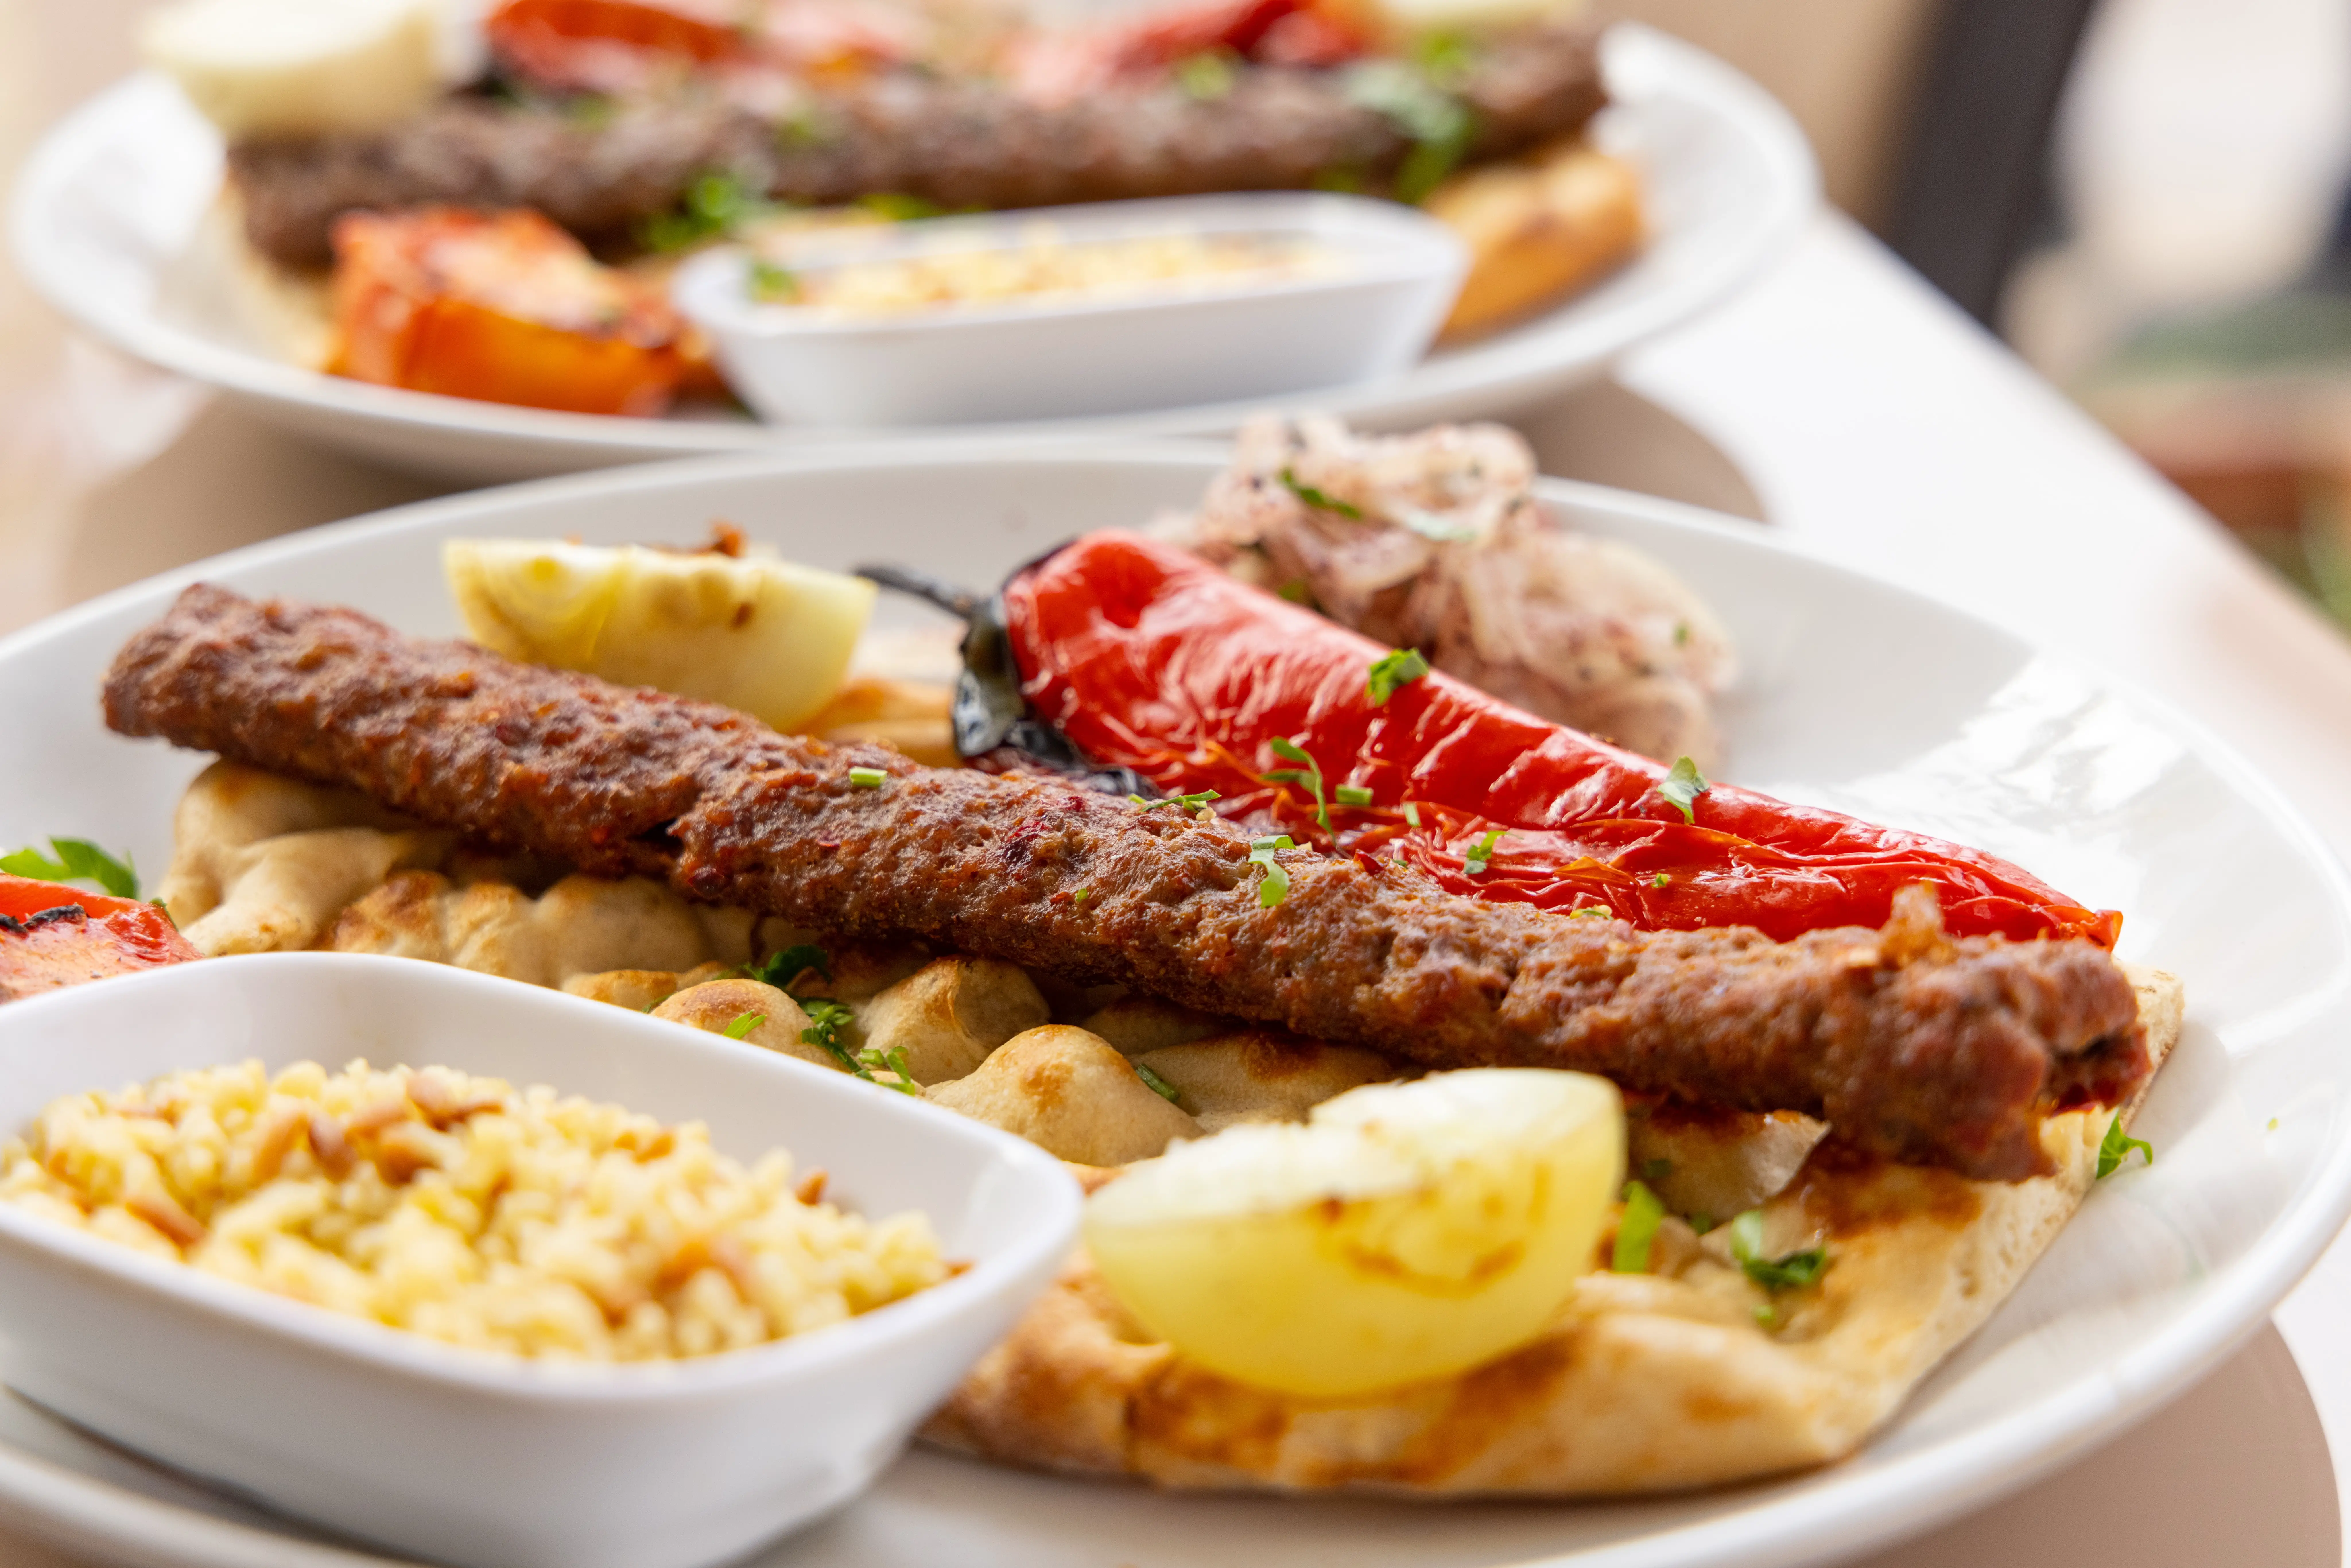 Turkish Cuisine - <a href="https://unsplash.com/photos/Giu791_4pqE?utm_source=unsplash&utm_medium=referral&utm_content=creditCopyText">Photo Source</a>